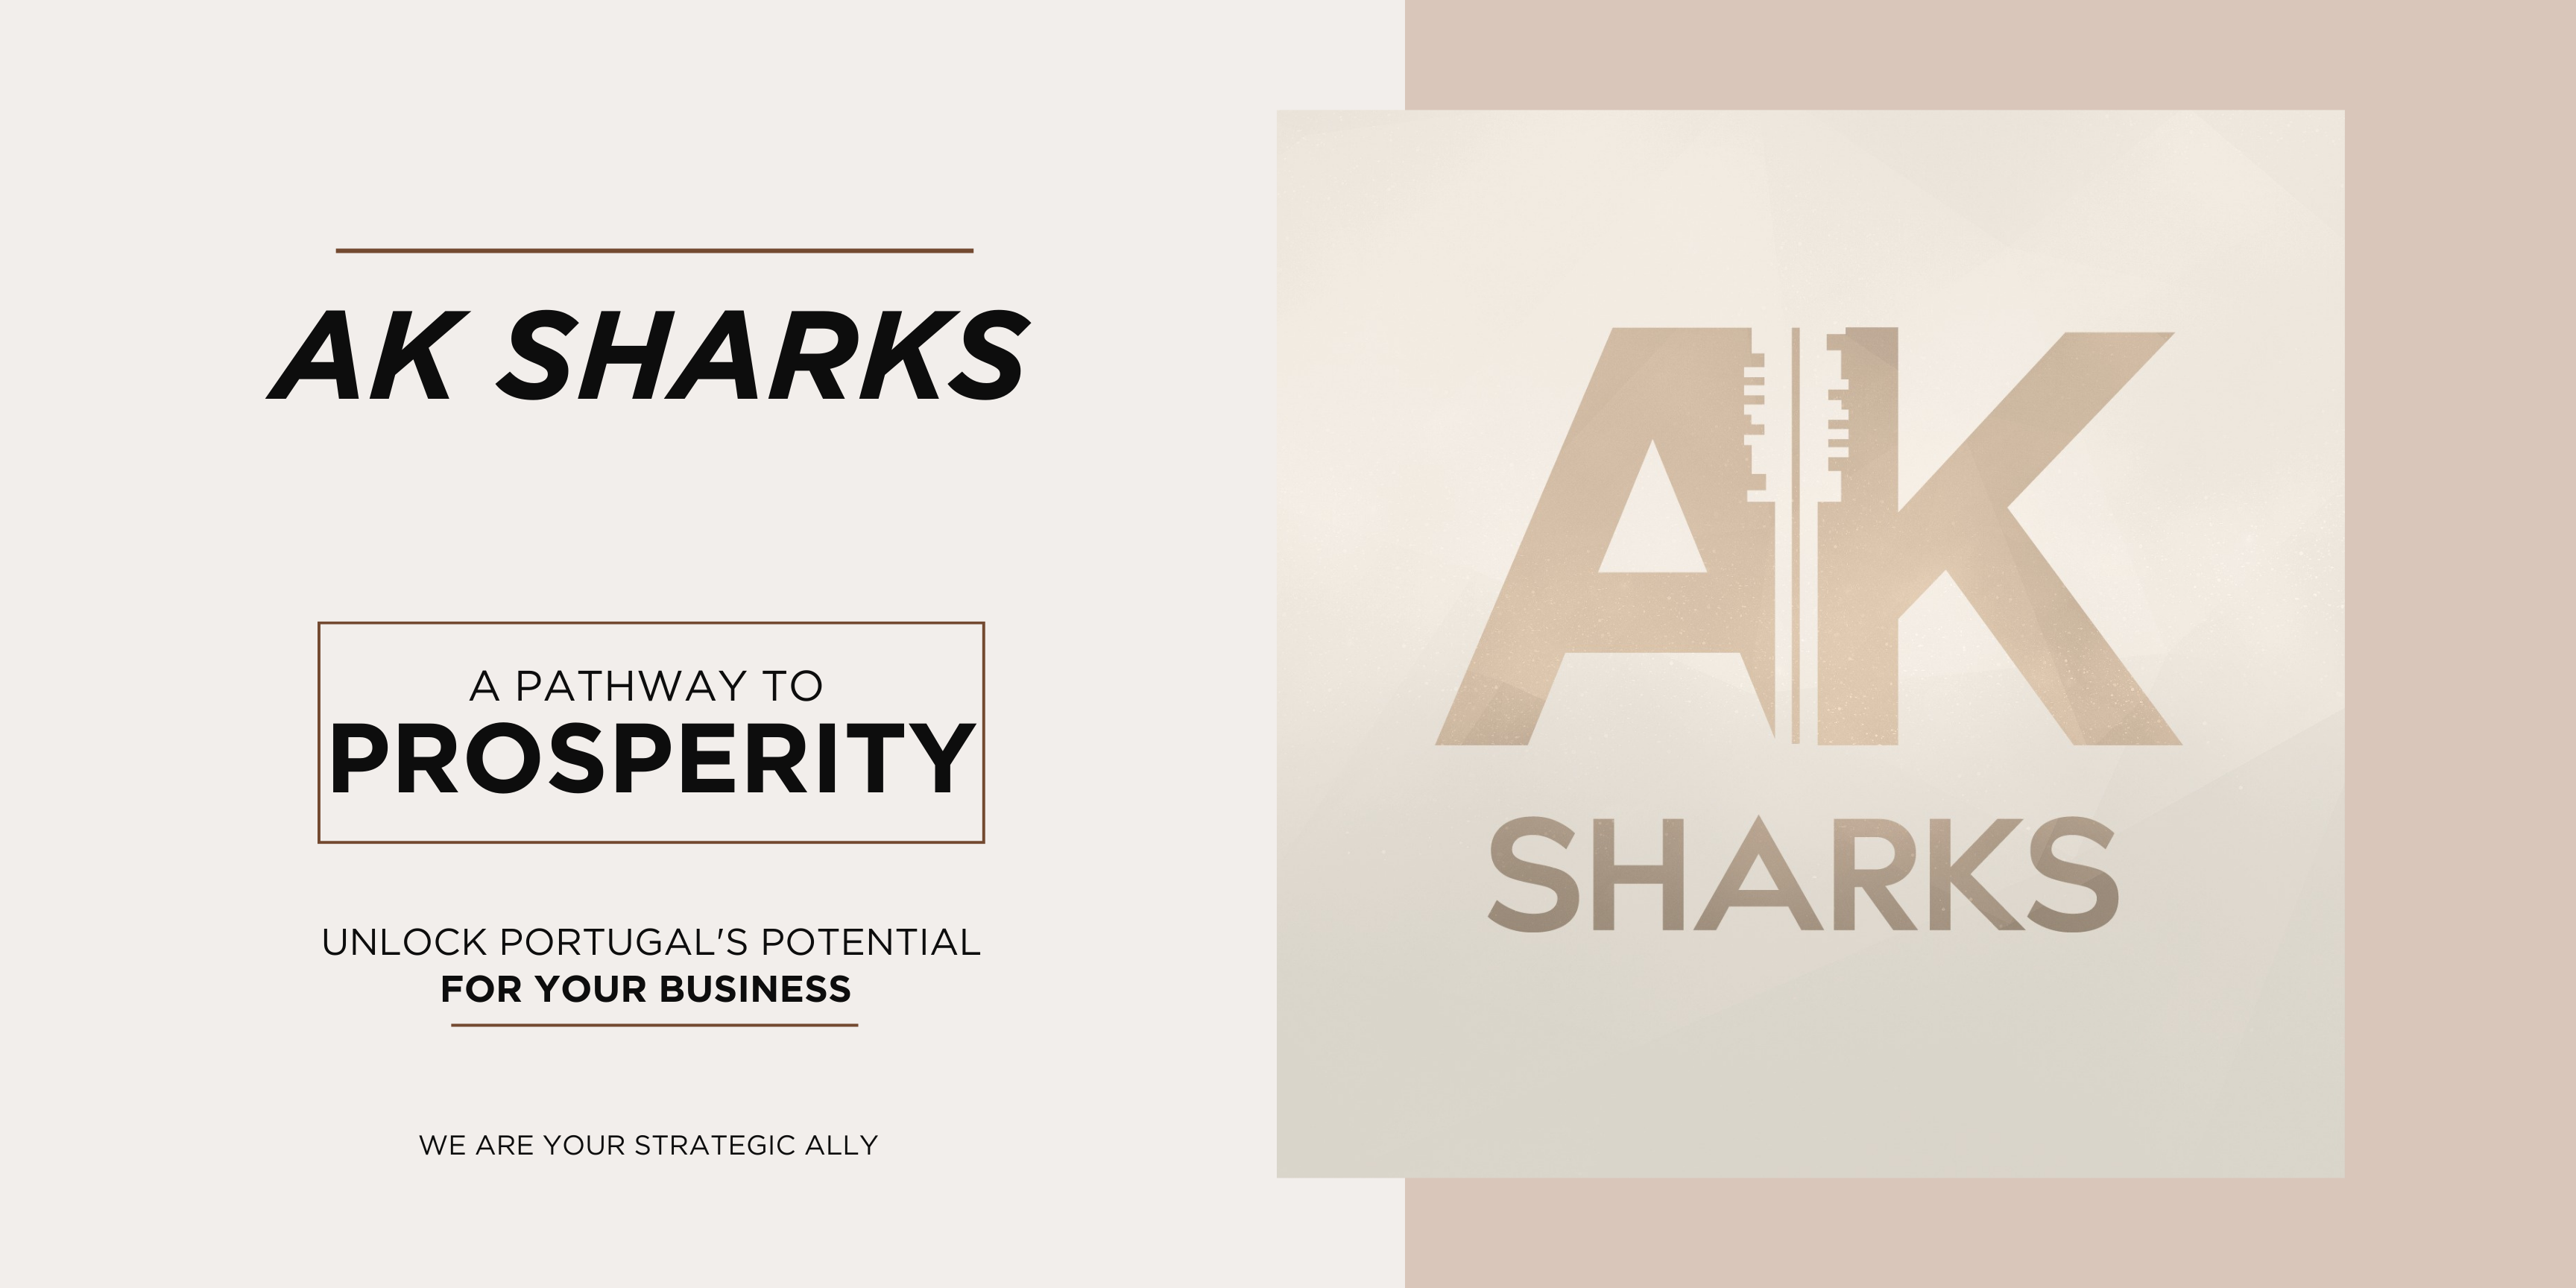 AK SHARKS